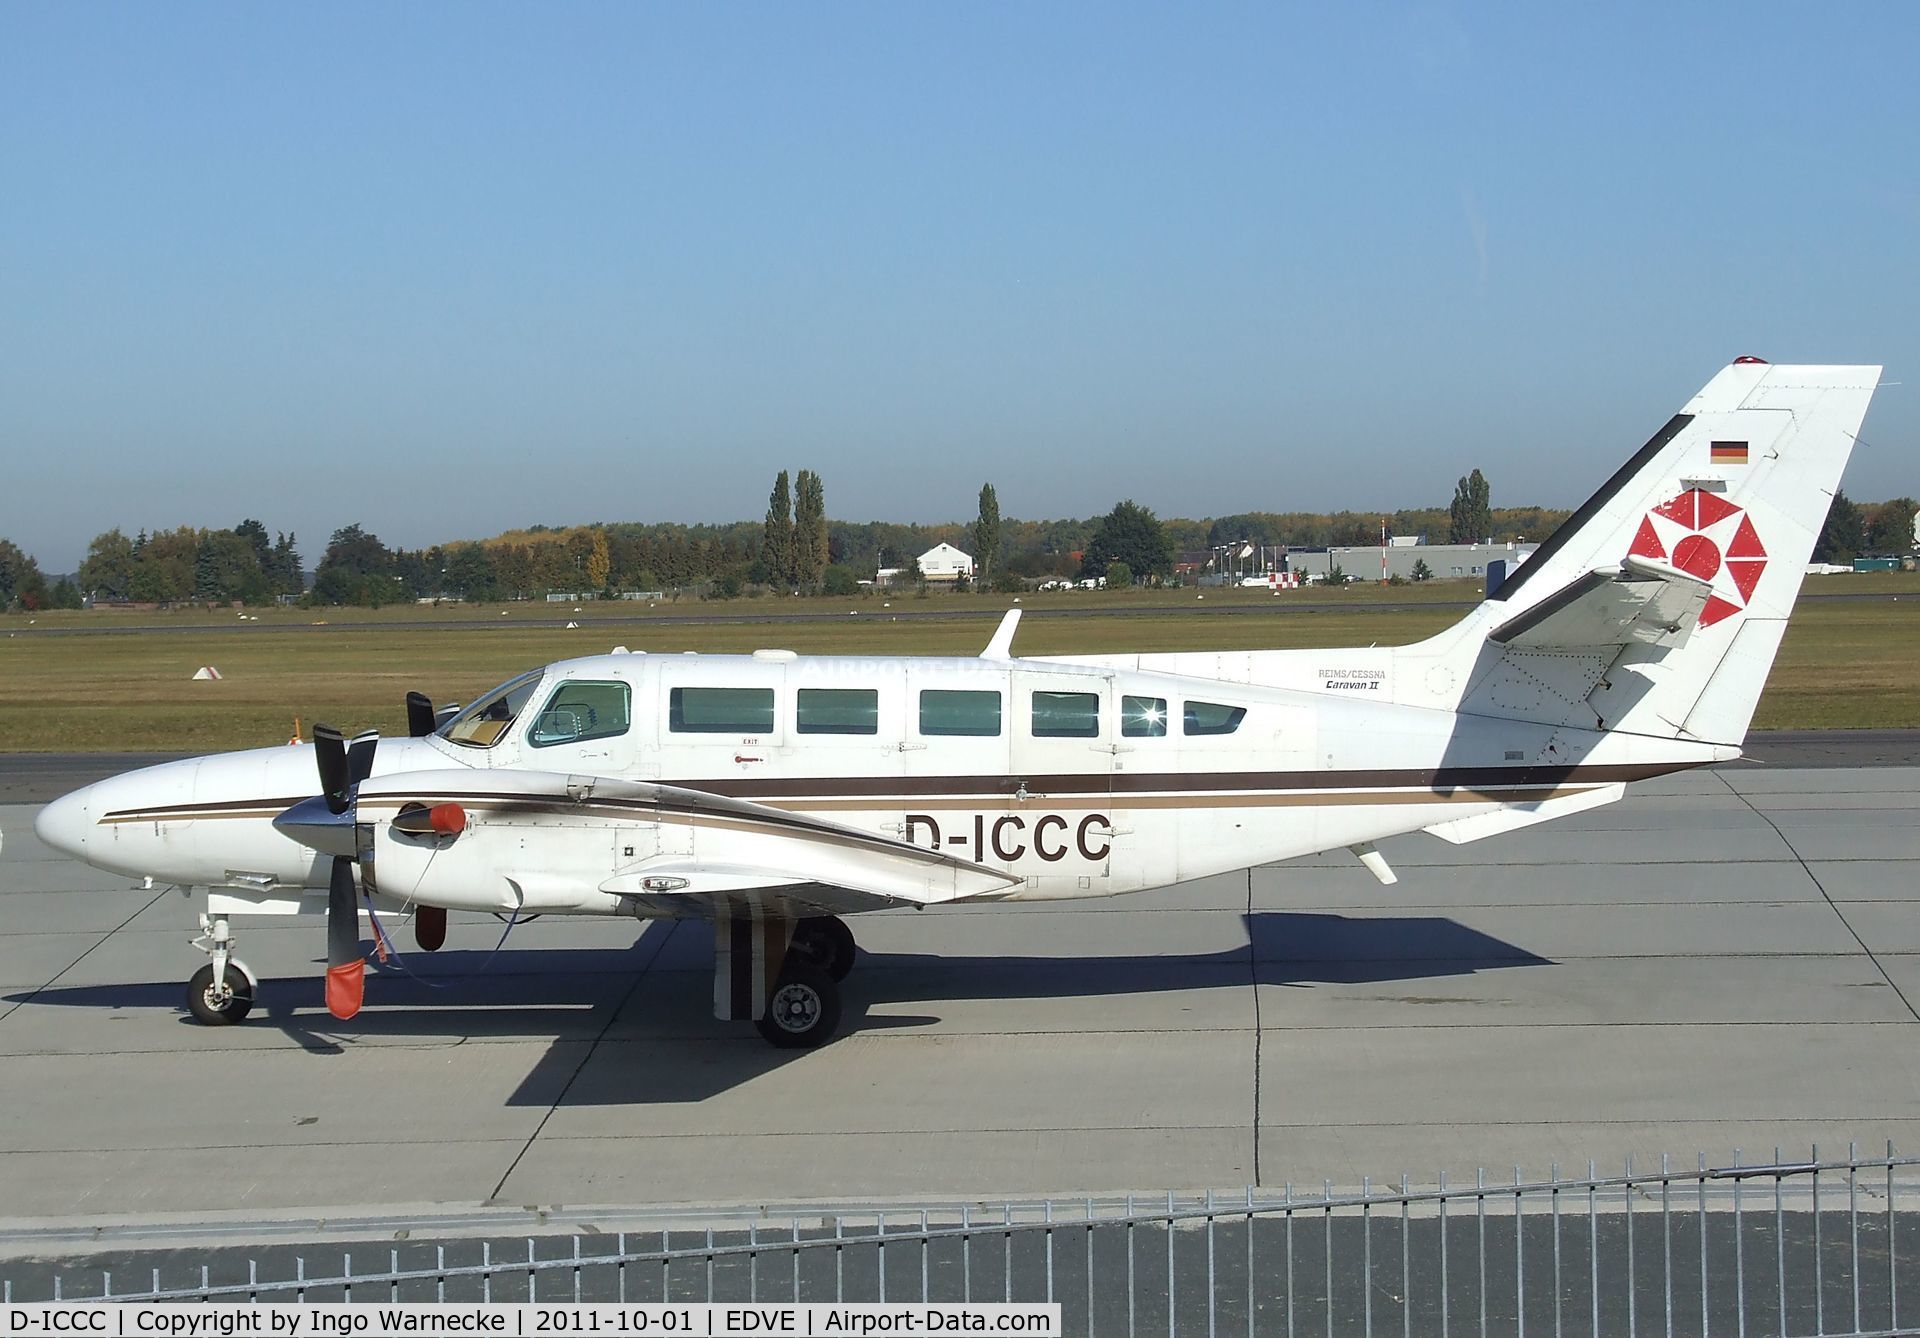 D-ICCC, 1990 Reims F406 Caravan II C/N F406-0050, Reims / Cessna F406 Caravan II at Braunschweig-Waggum airport